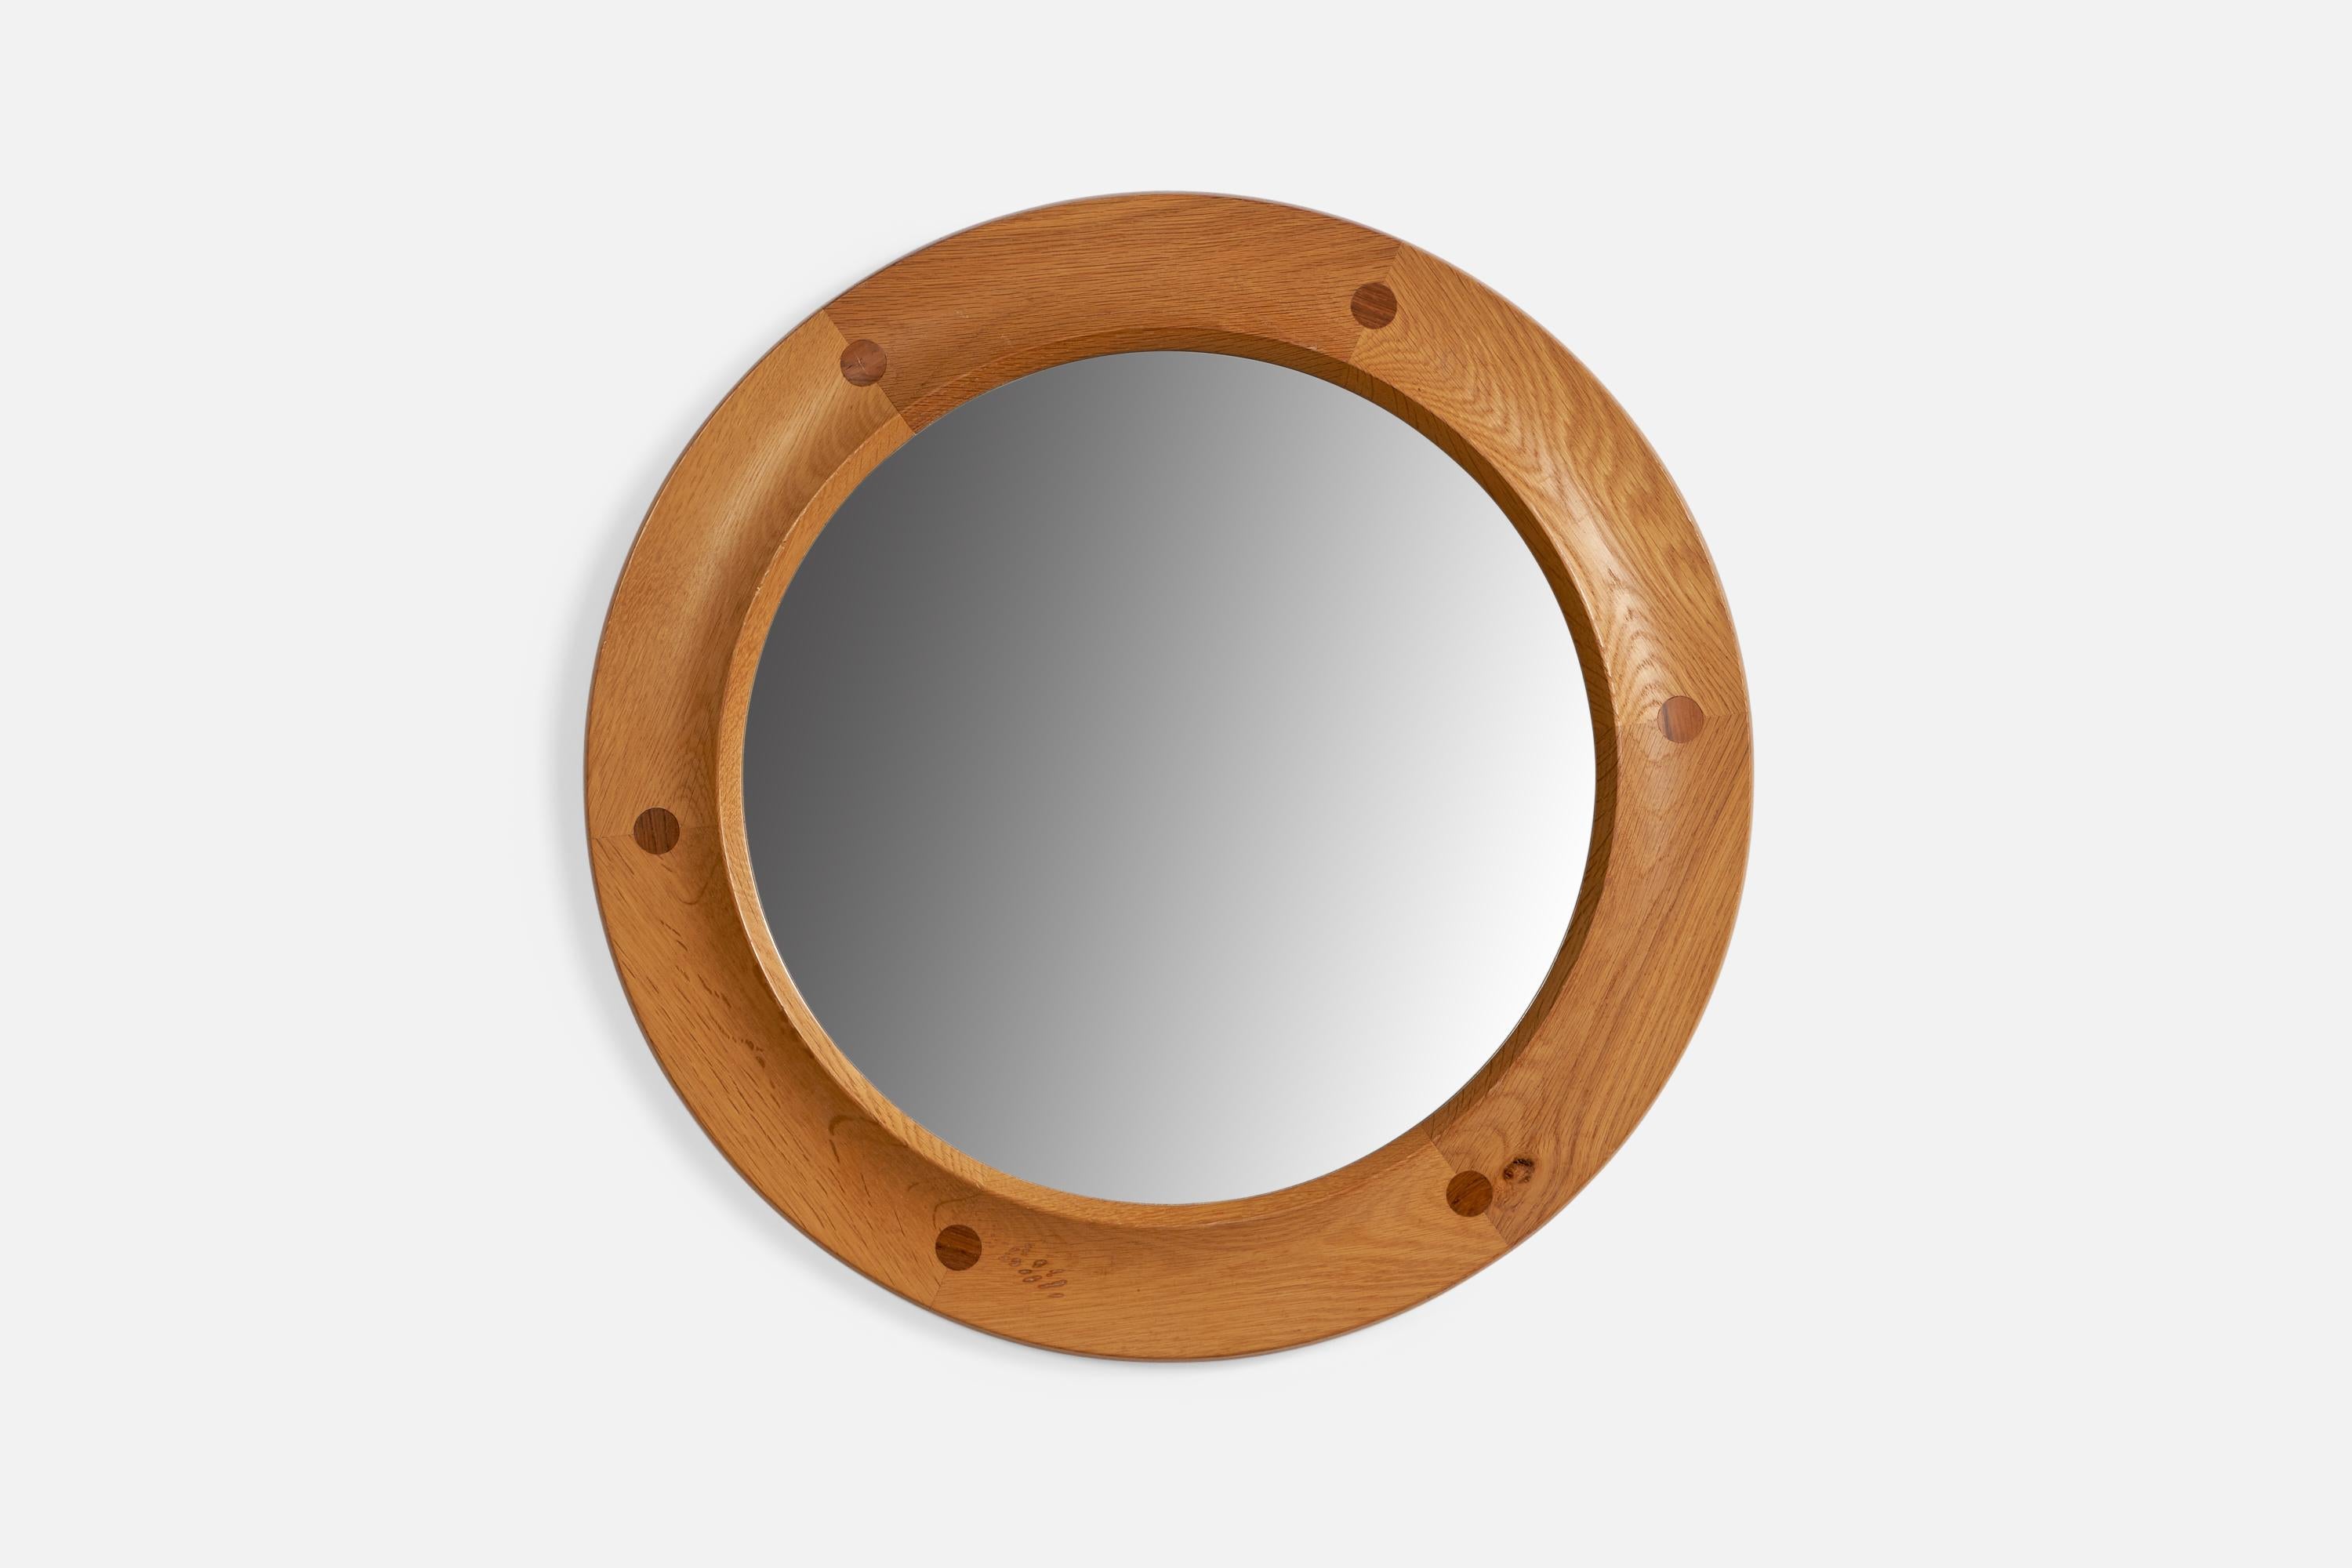 An oak and teak inlay mirror designed by Sigvard Bernadotte & Acton Bjørn, produced by Fröseke, Sweden, c. 1960s.